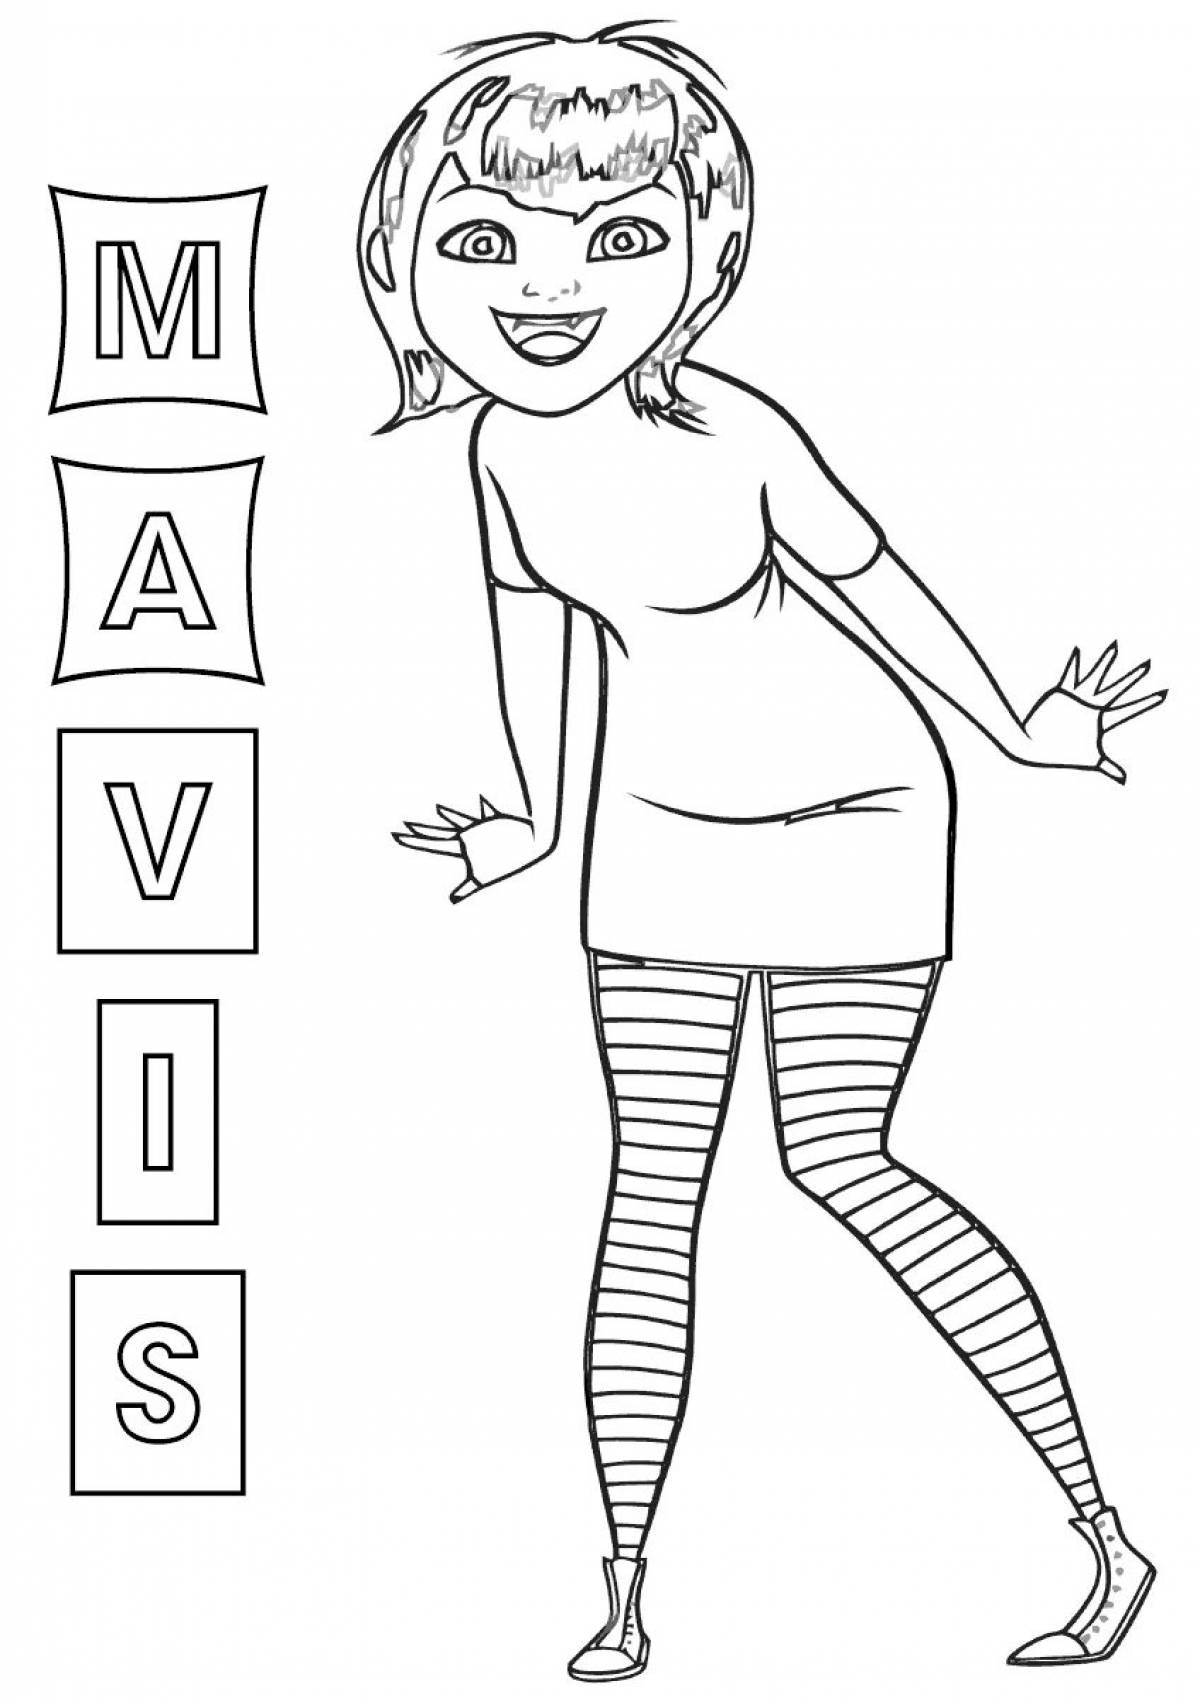 Innovative Mavis coloring